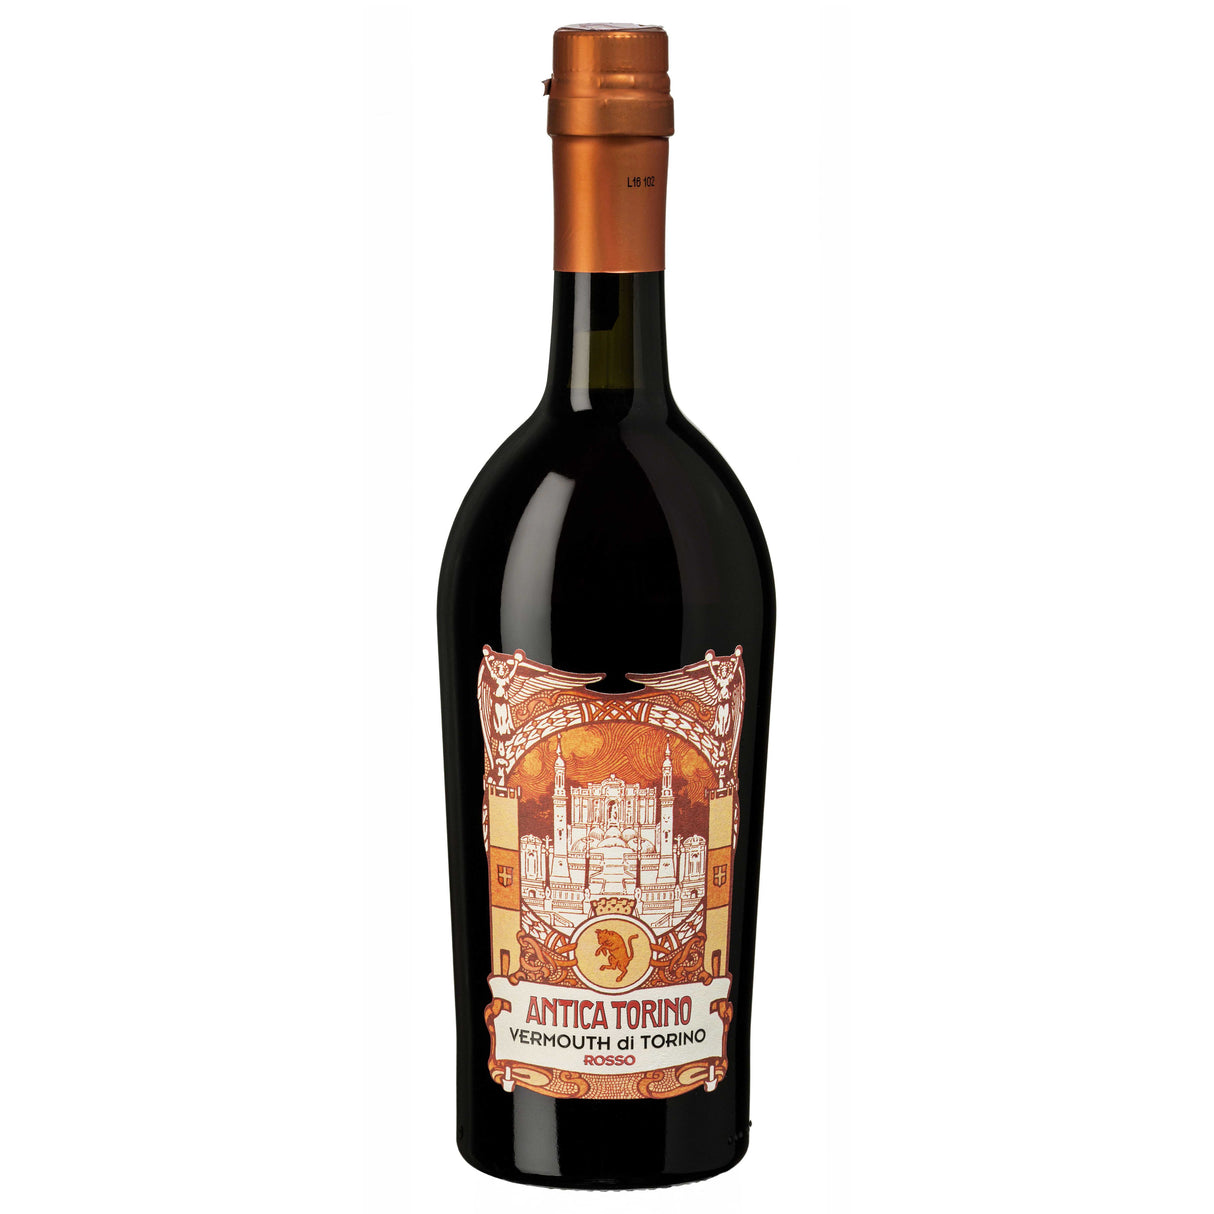 Antica Torino Vermouth di Torino Rosso-Spirits-World Wine